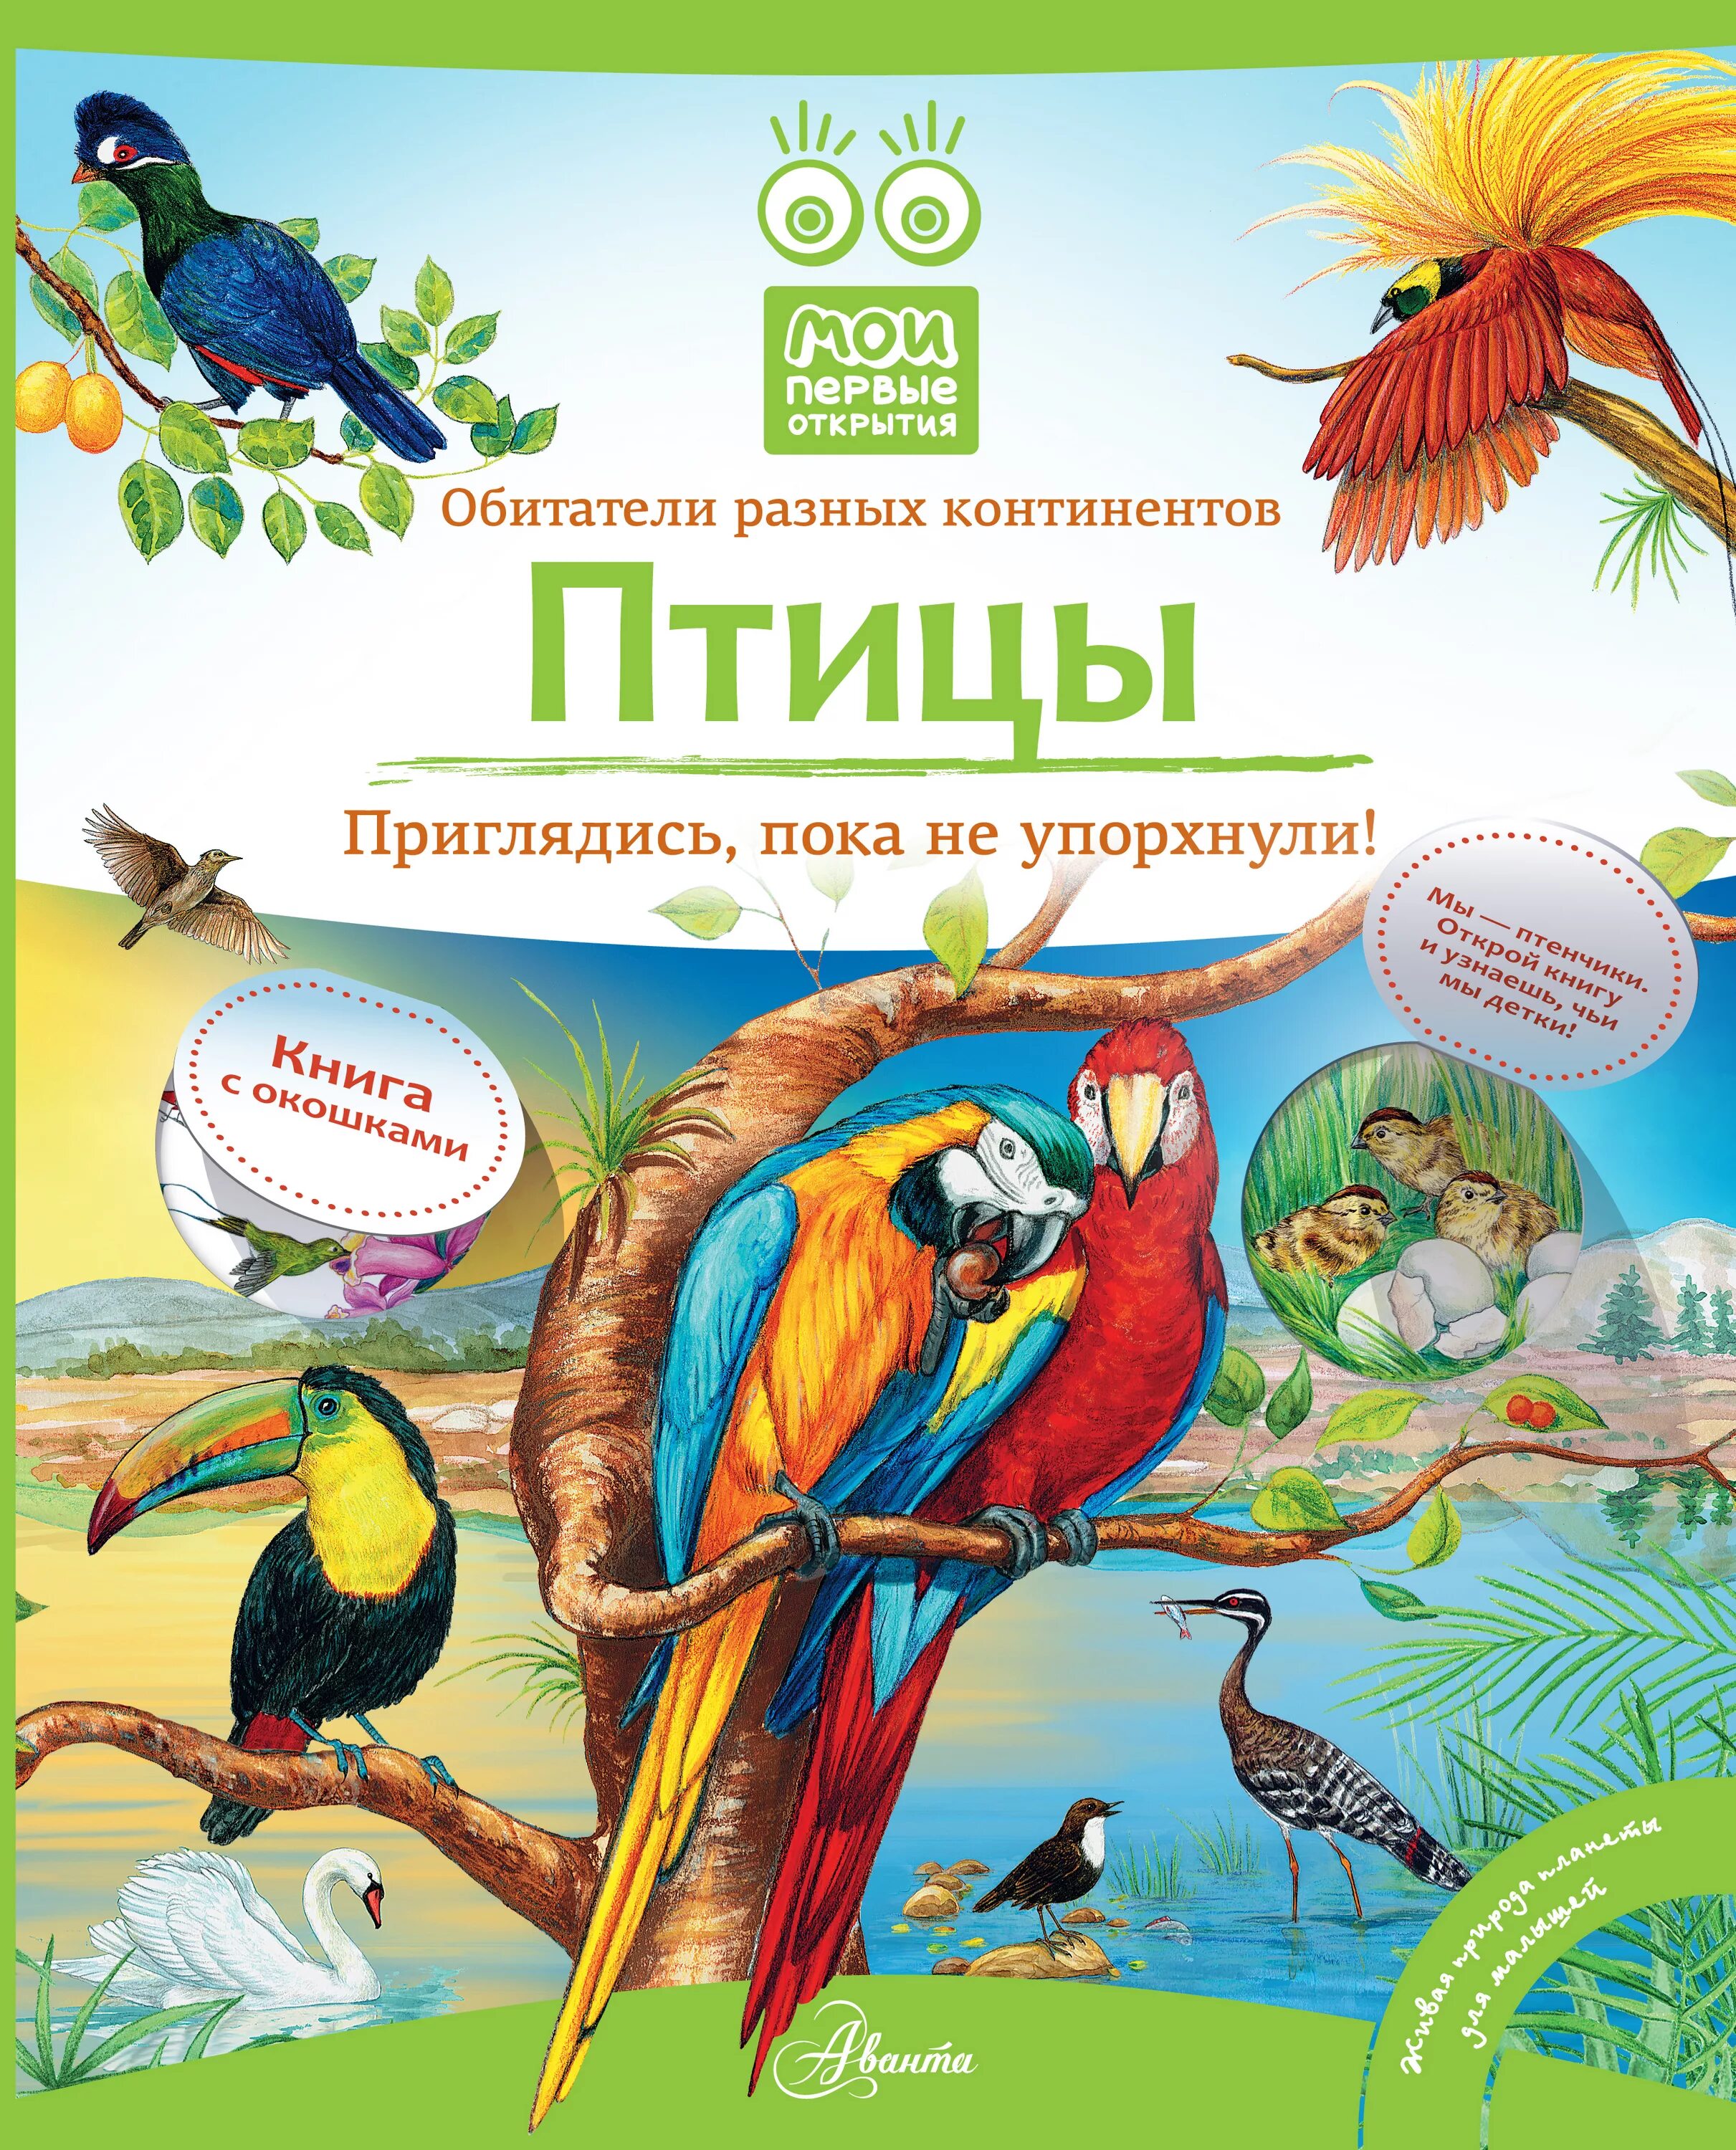 Книги о птицах. Книги о птицах для детей. Rybub j gnbwf[ lkz ltntq. Книги о птицах Художественные.